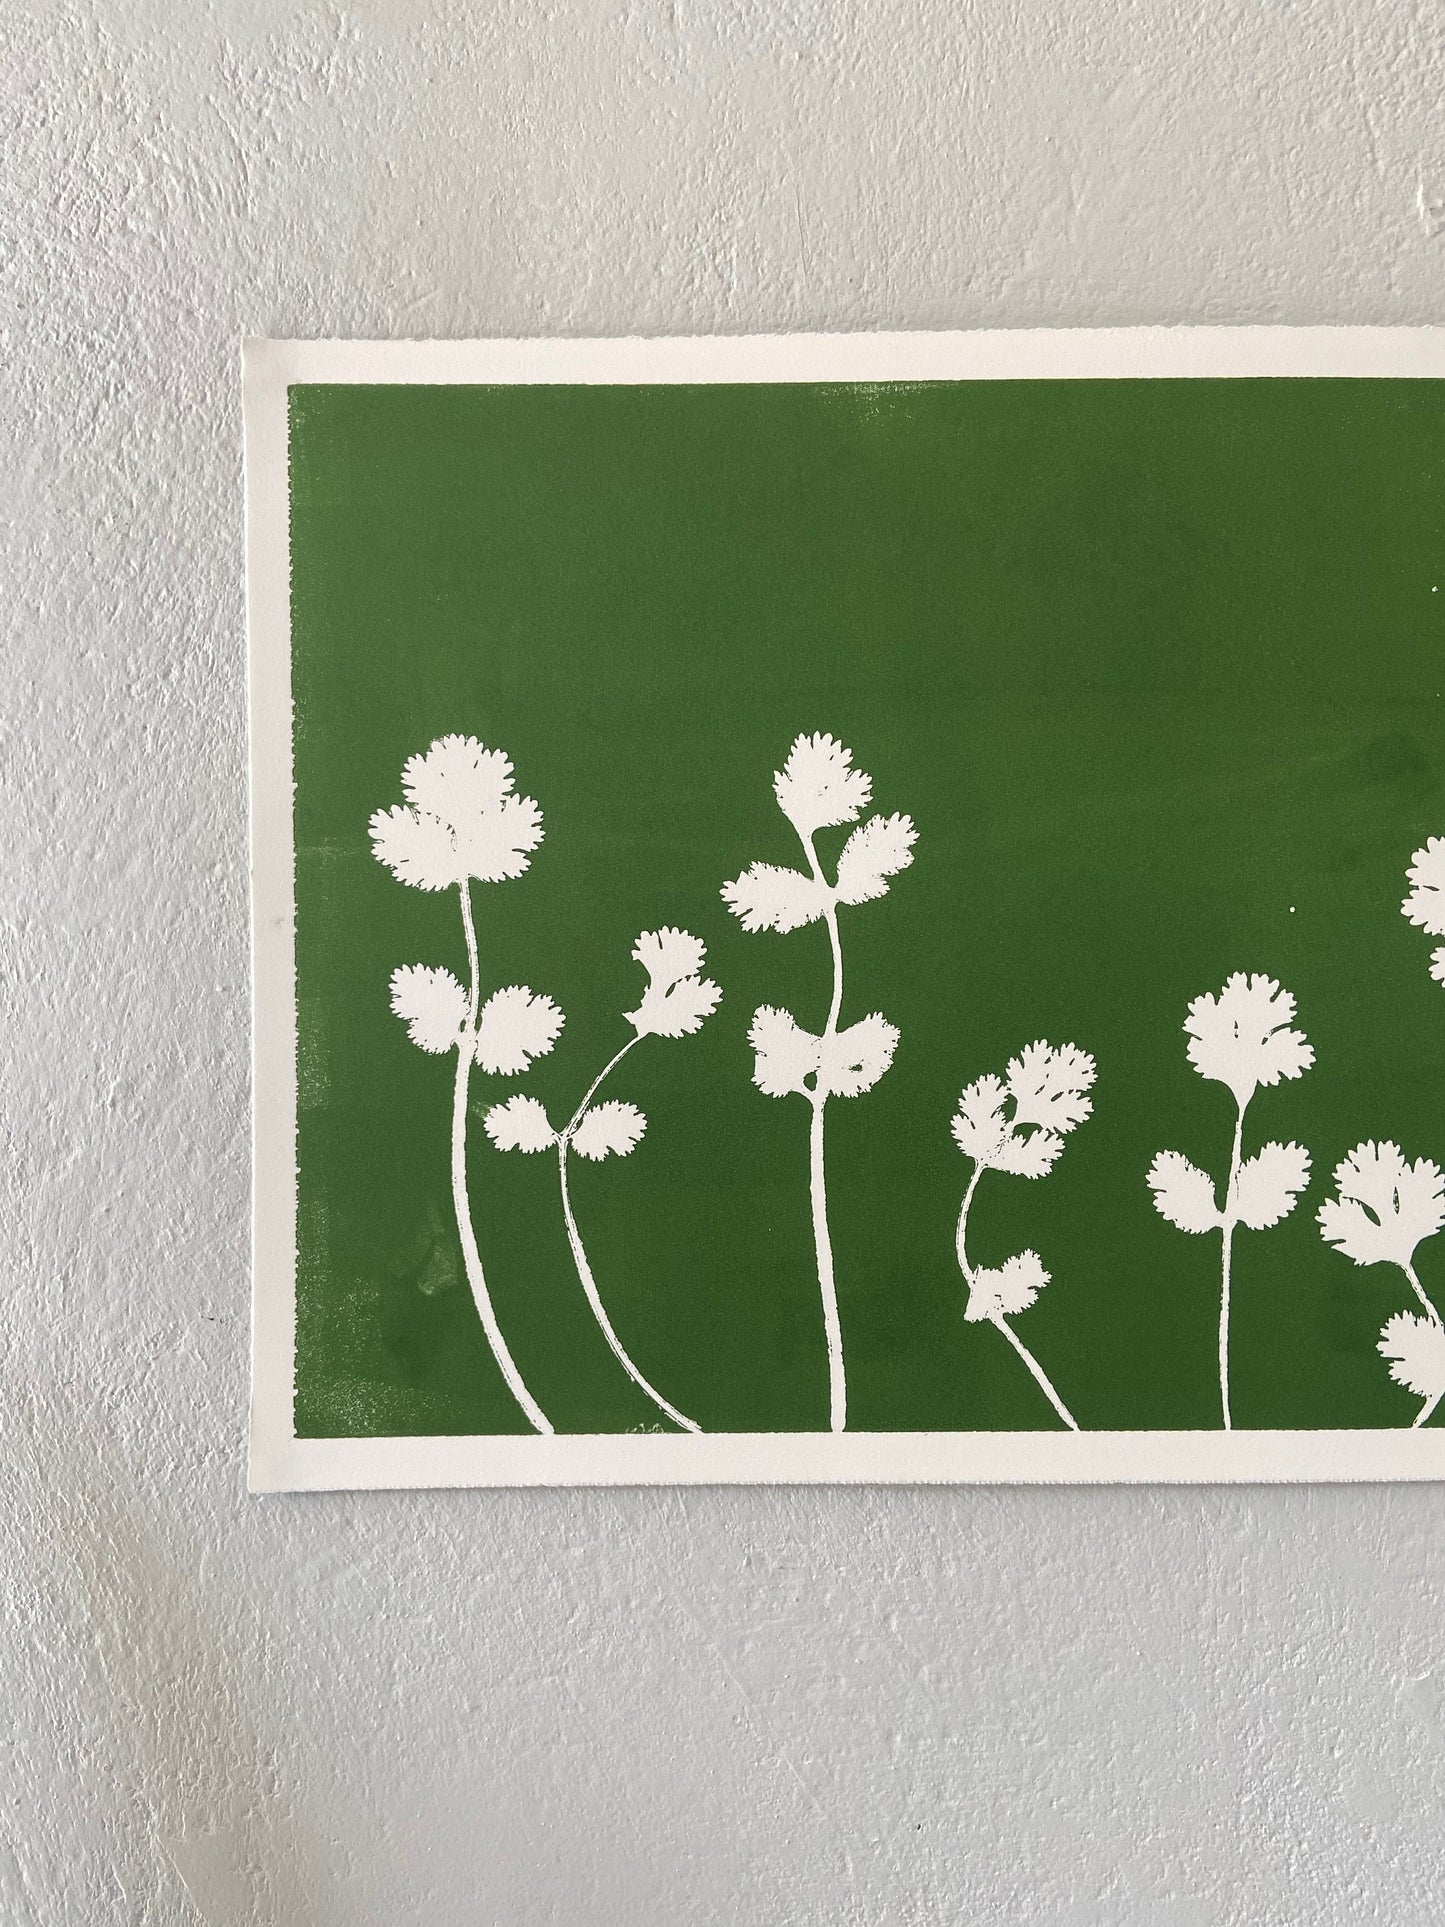 Oregano Leaves Hand Pressed Monoprint - 12x18 giclee print